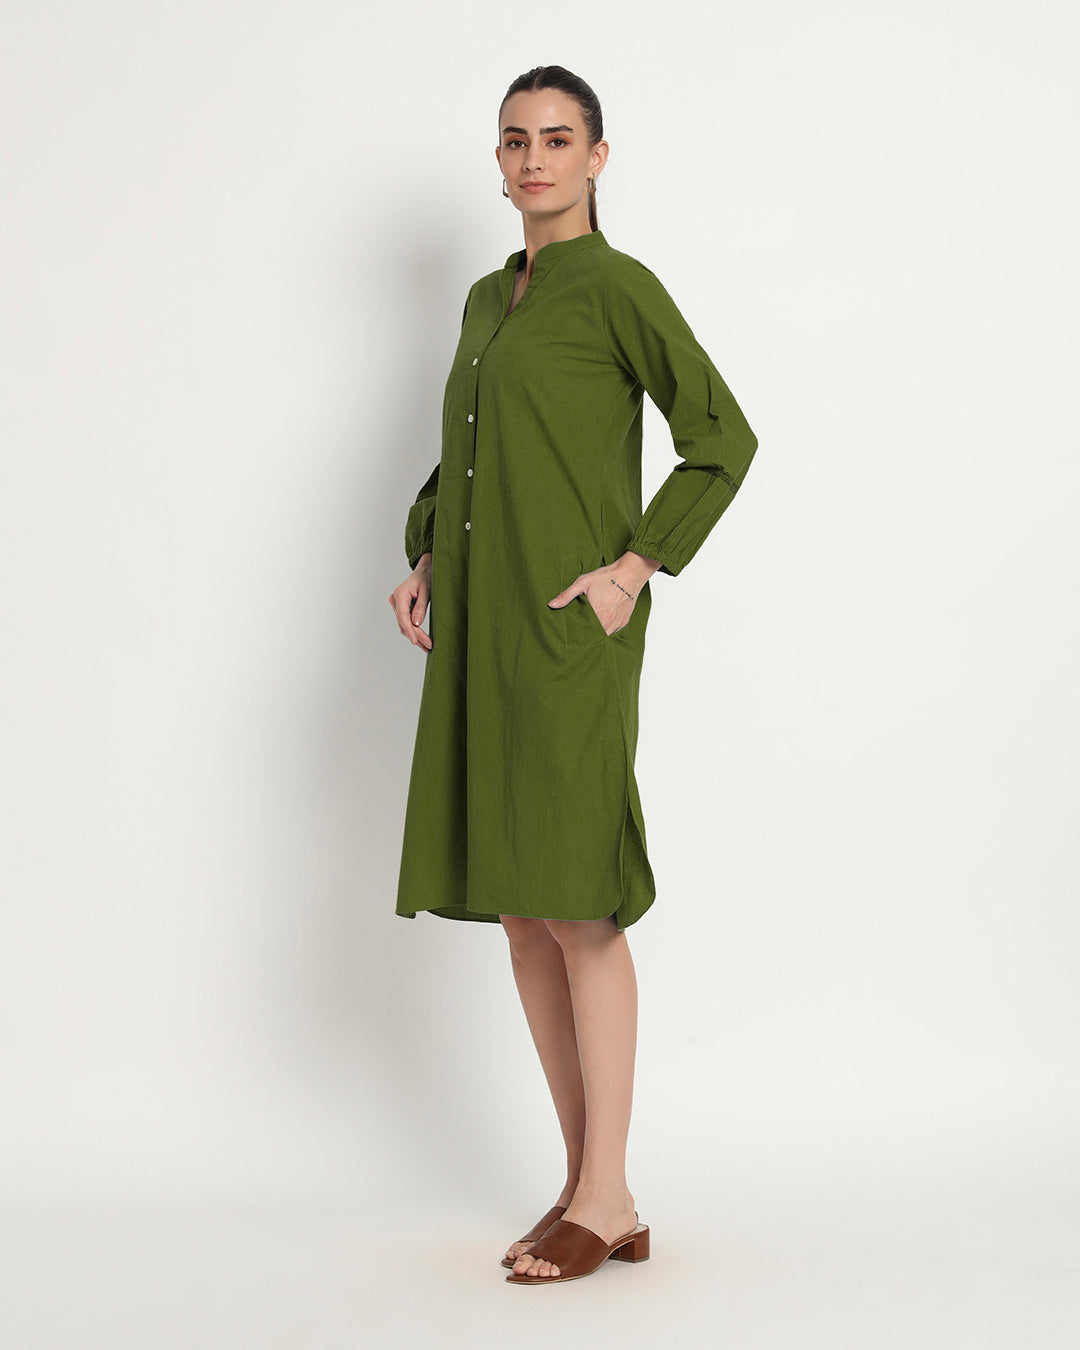 Greening Spring Modish Elegance Notch Neck Dress